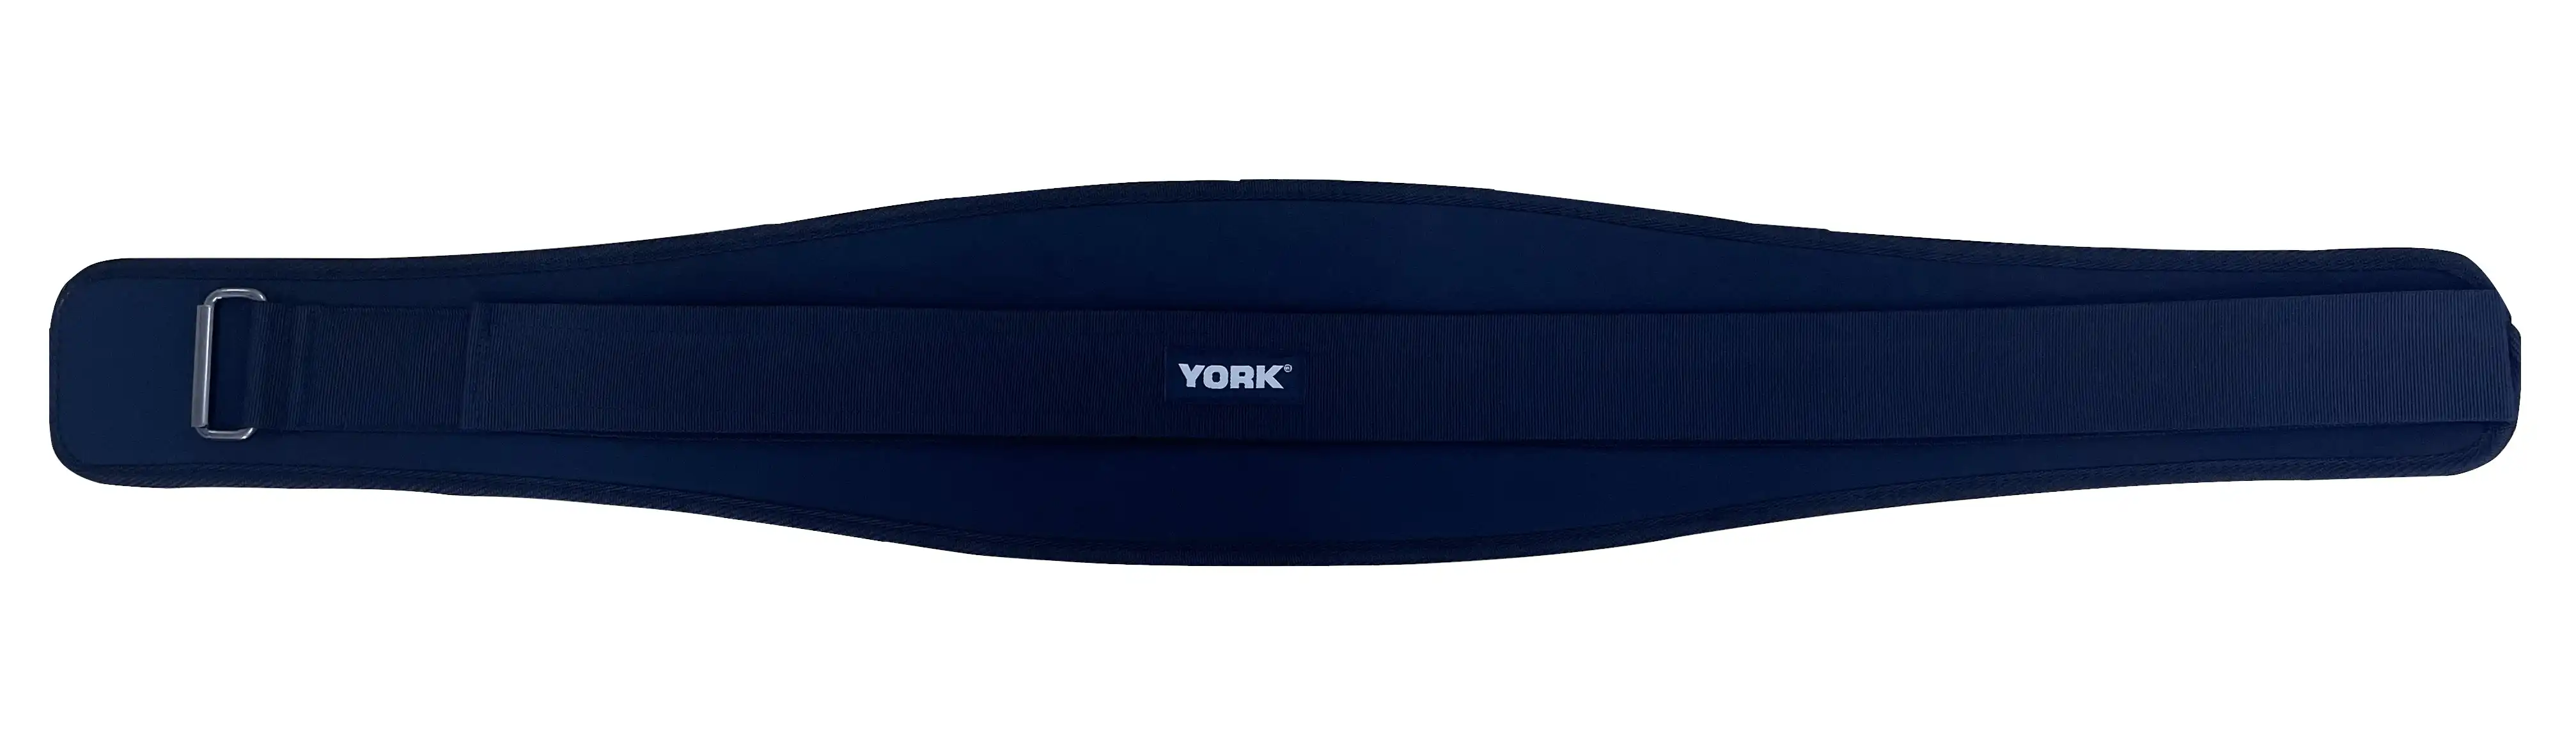 York Fitness 6" York Nylon Padded Weight lifting Belt S/M